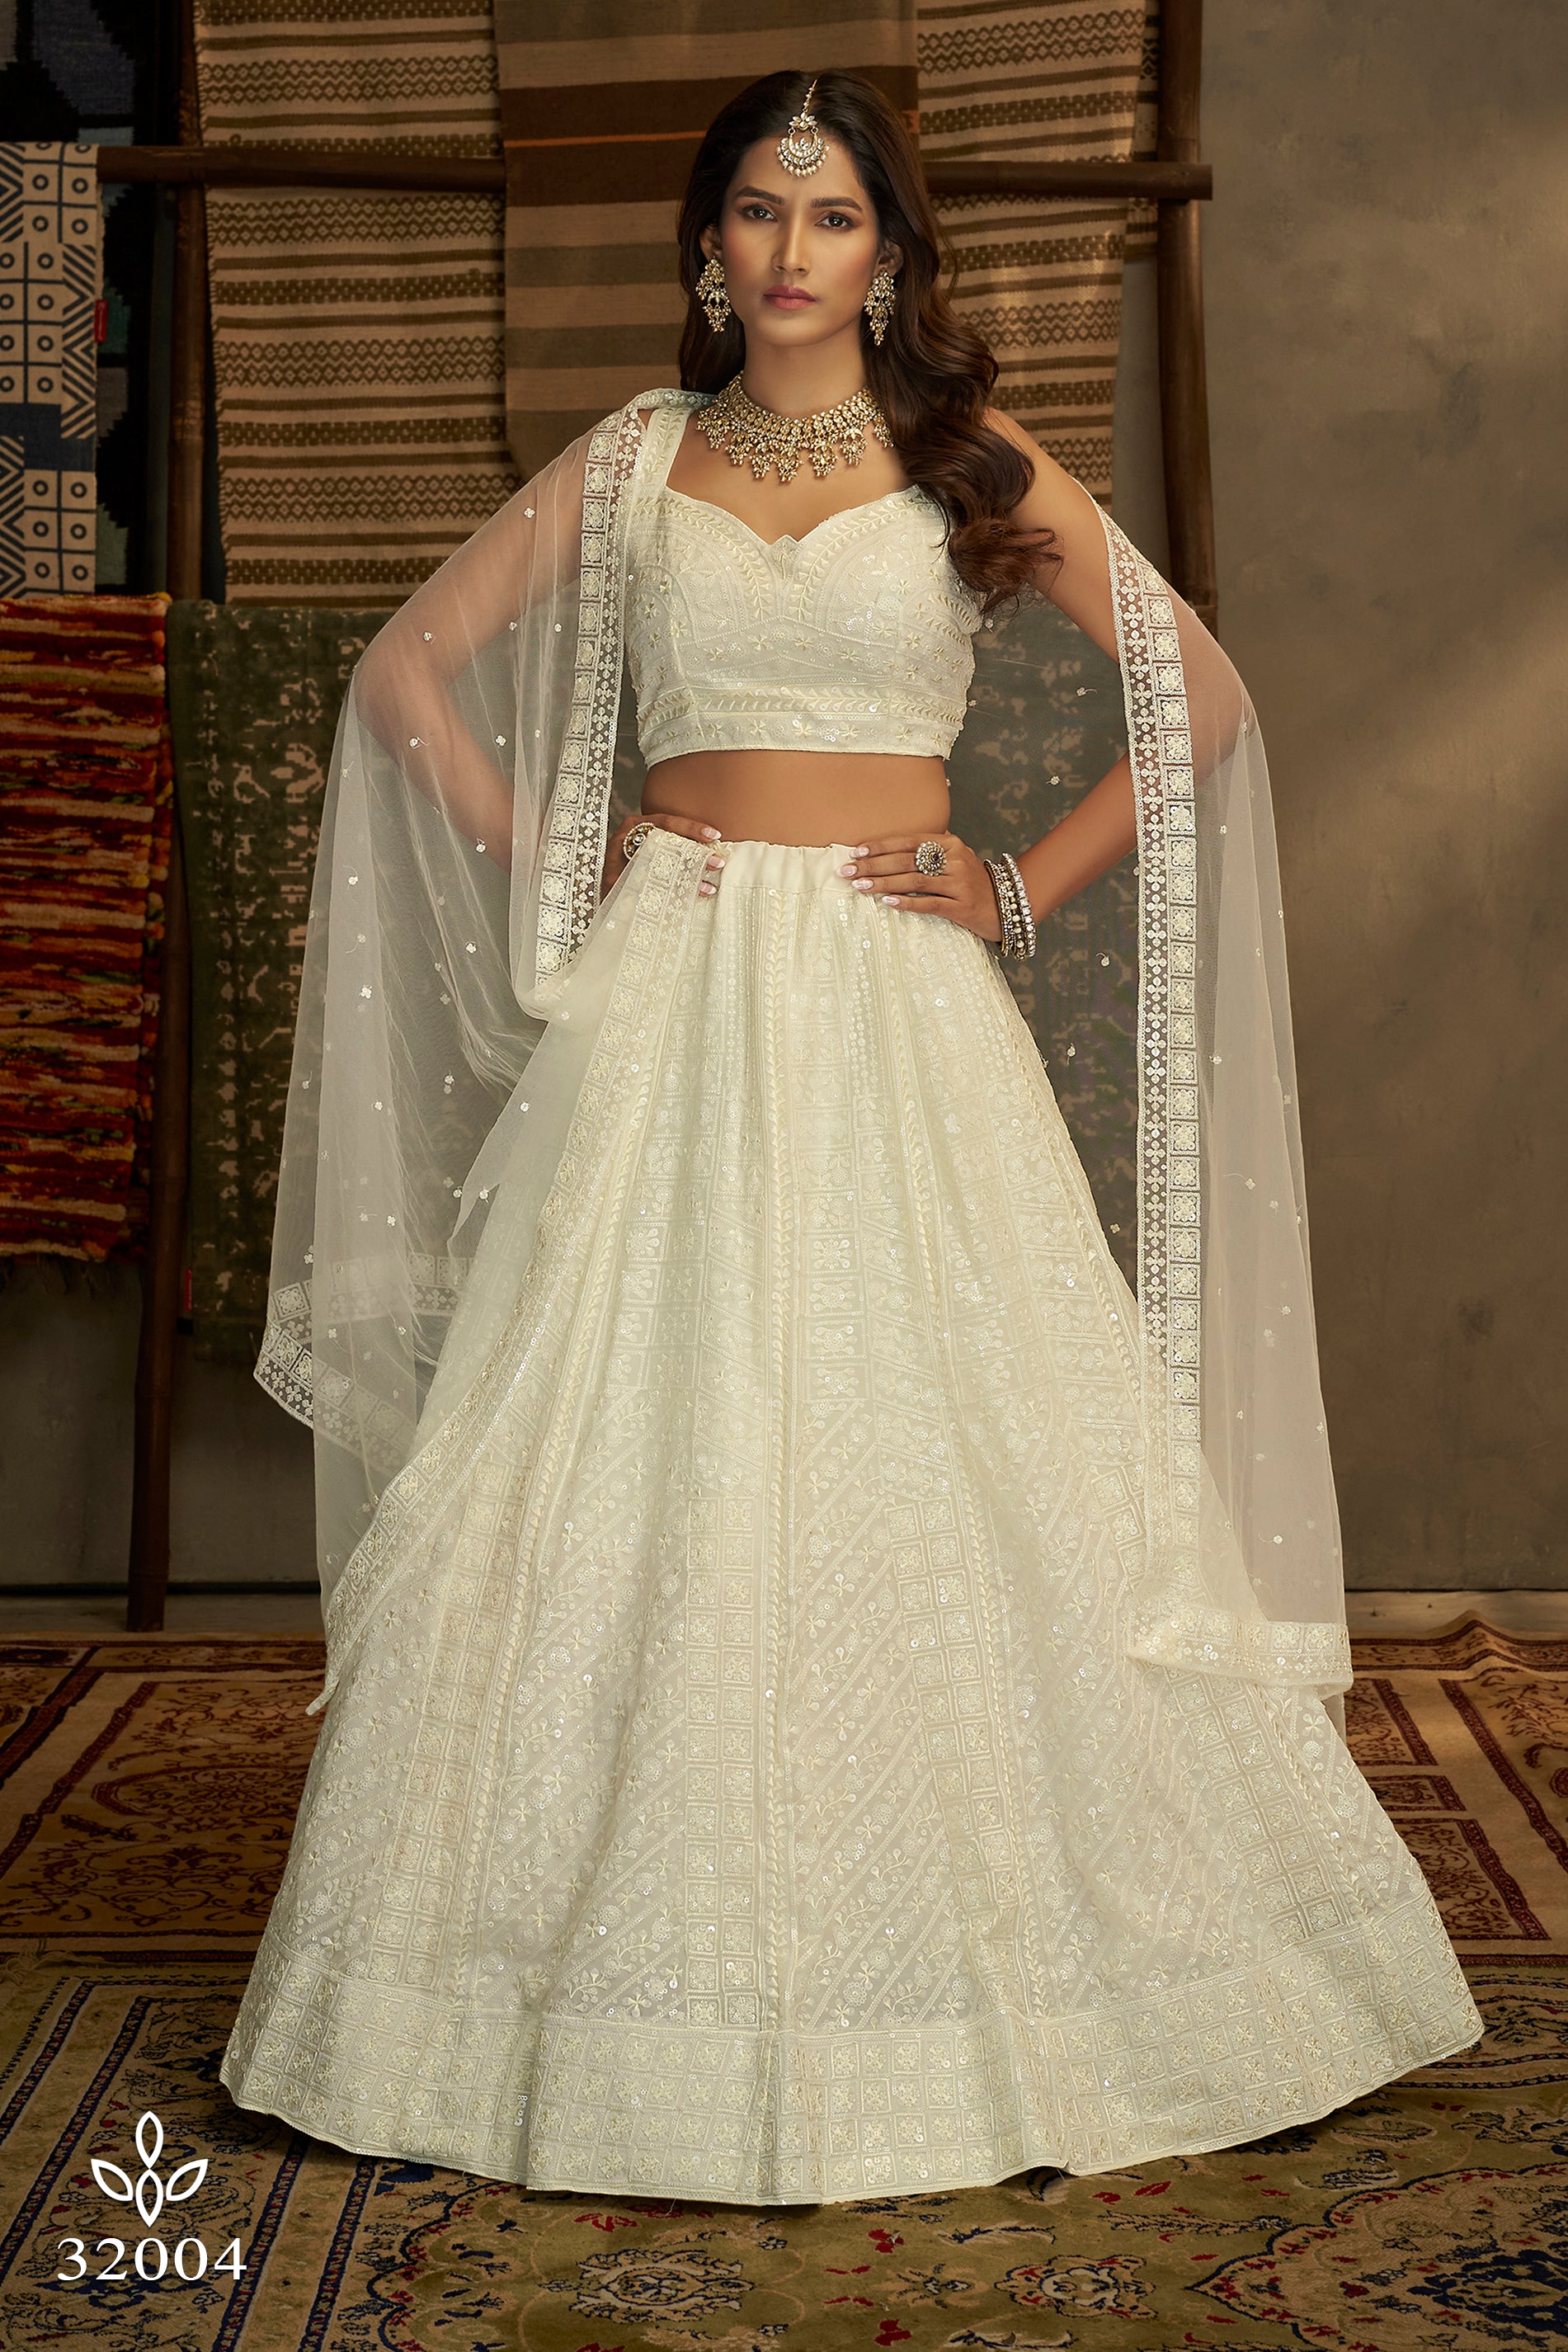 Where can I get the latest designer Indian wedding lehenga? - Quora